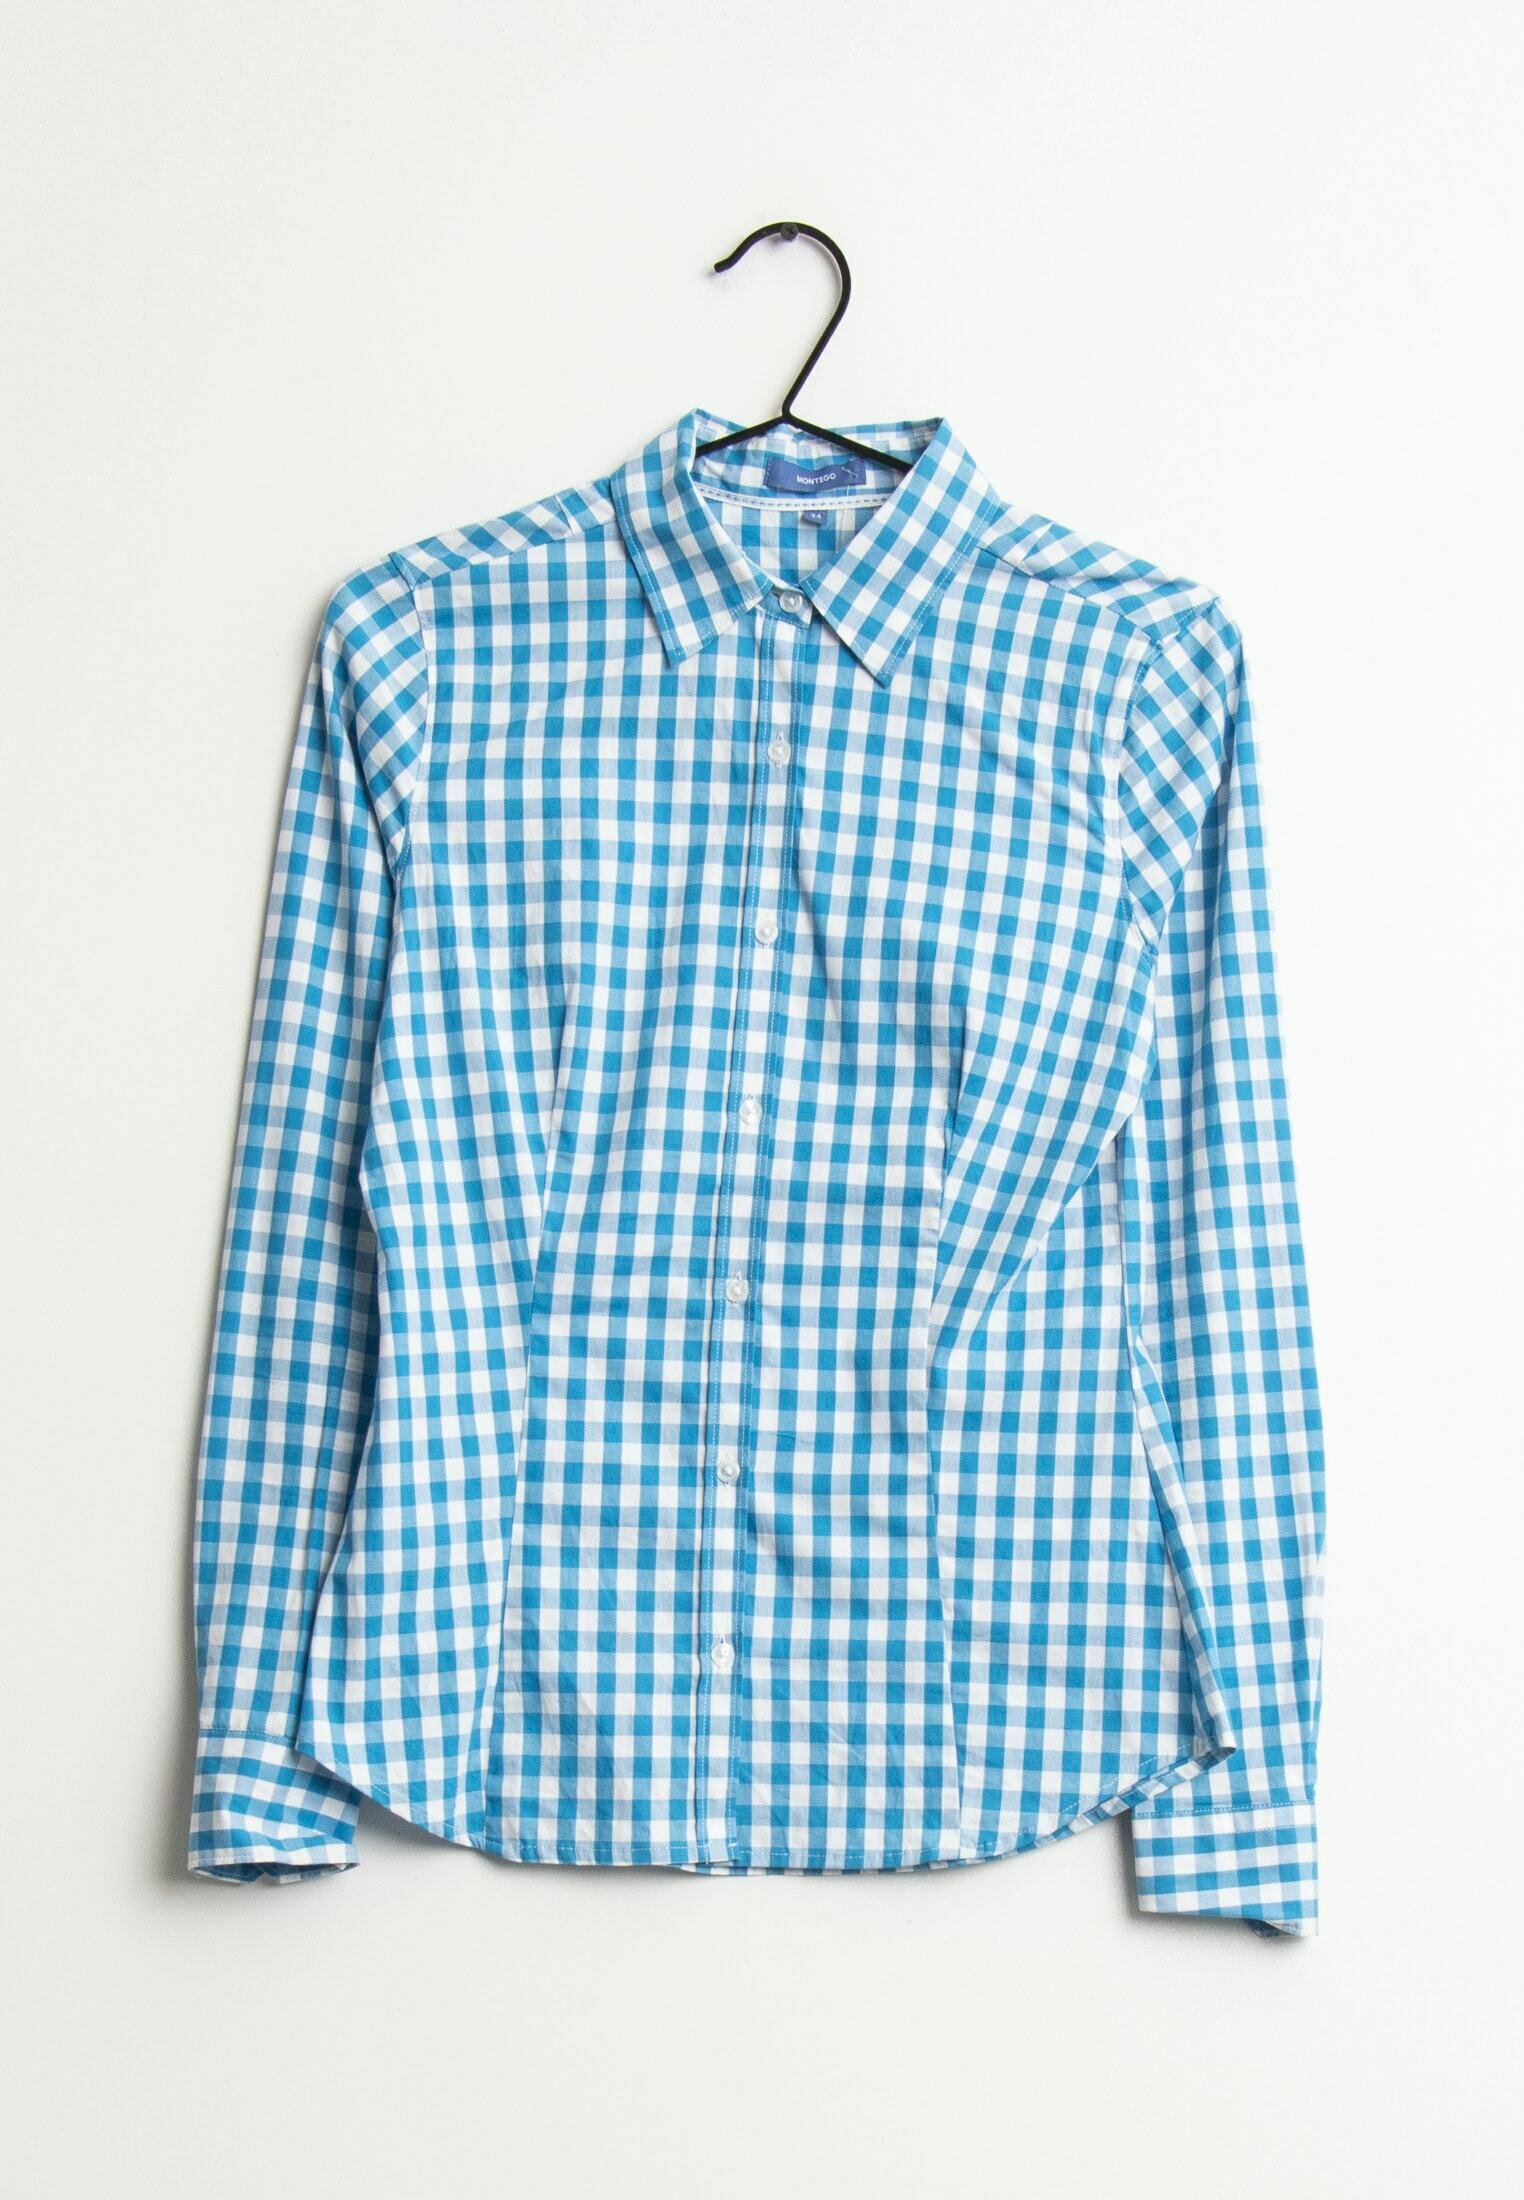 Montego skjortor